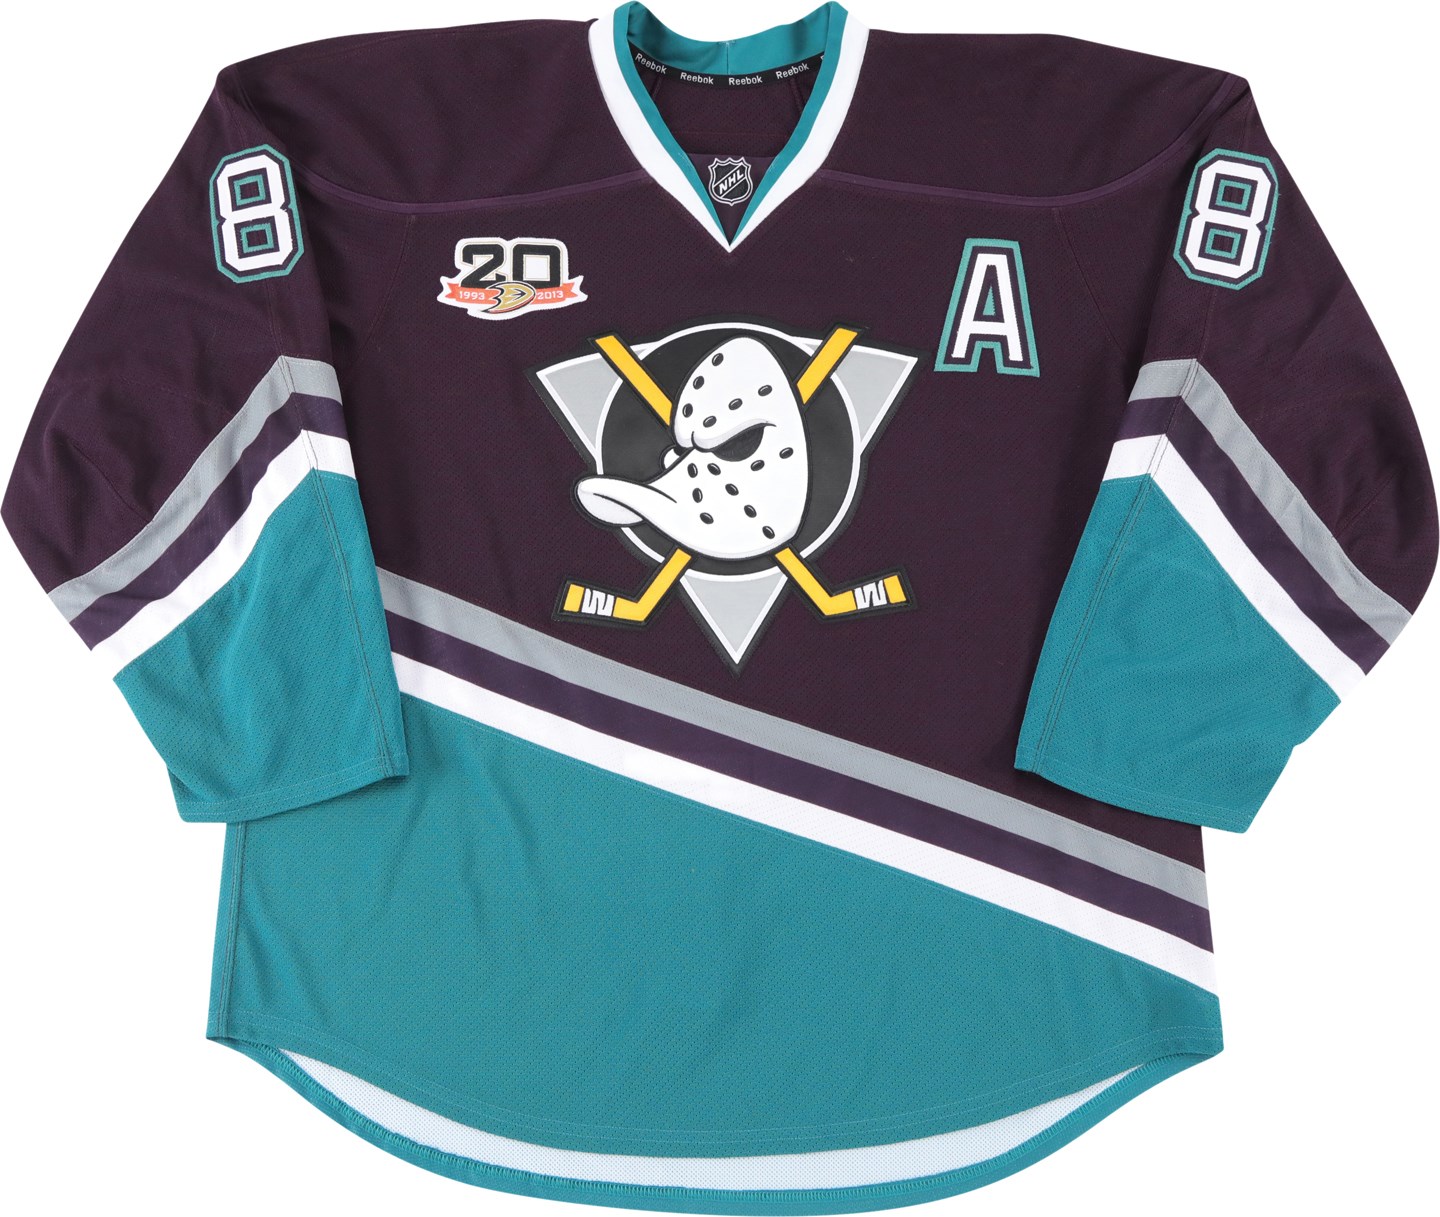 Hockey - 2013-14 Teemu Selanne Anaheim Ducks Signed Game Issued Jersey